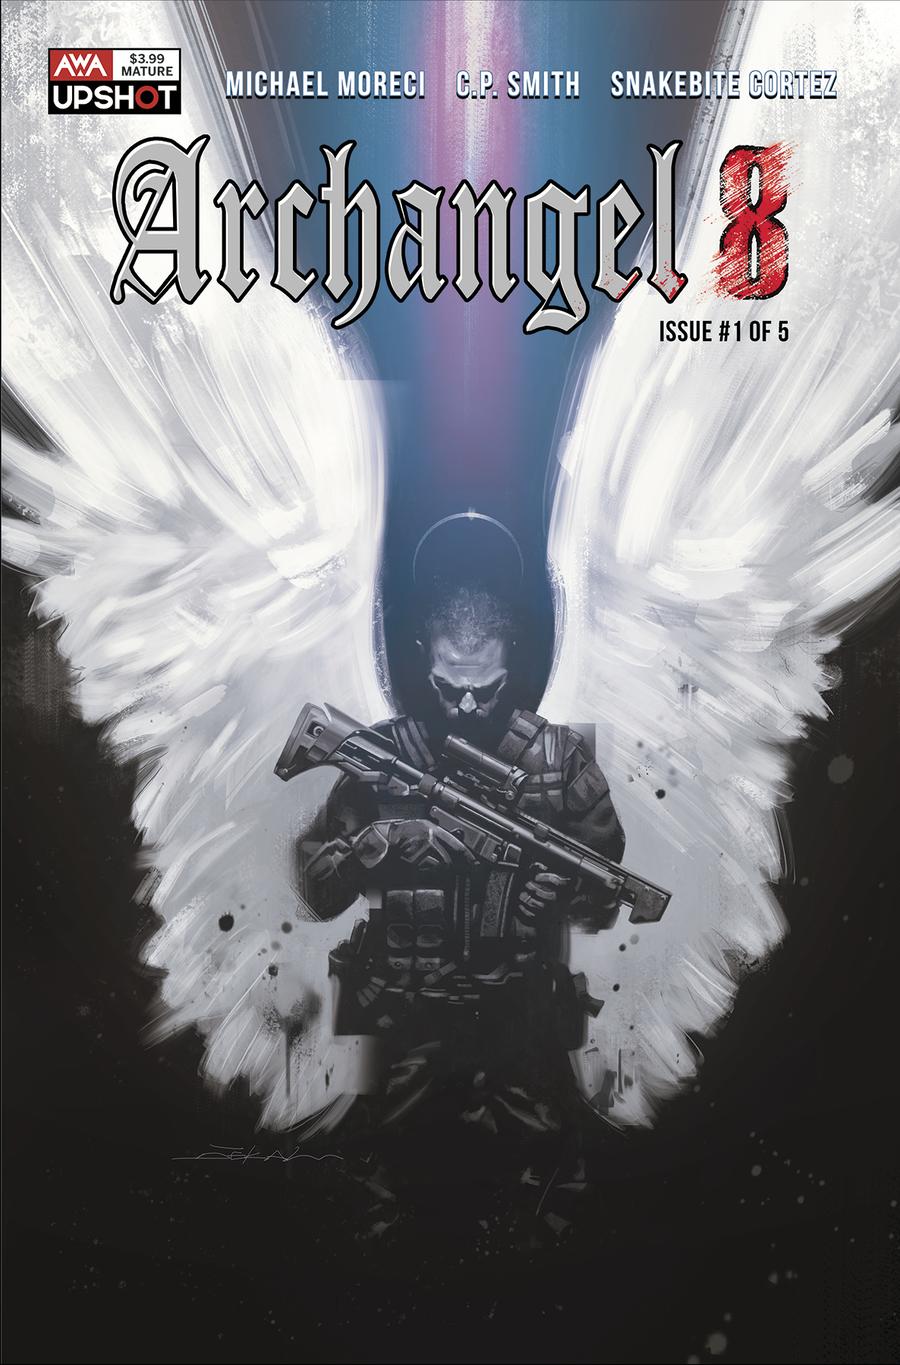 Archangel 8 #1